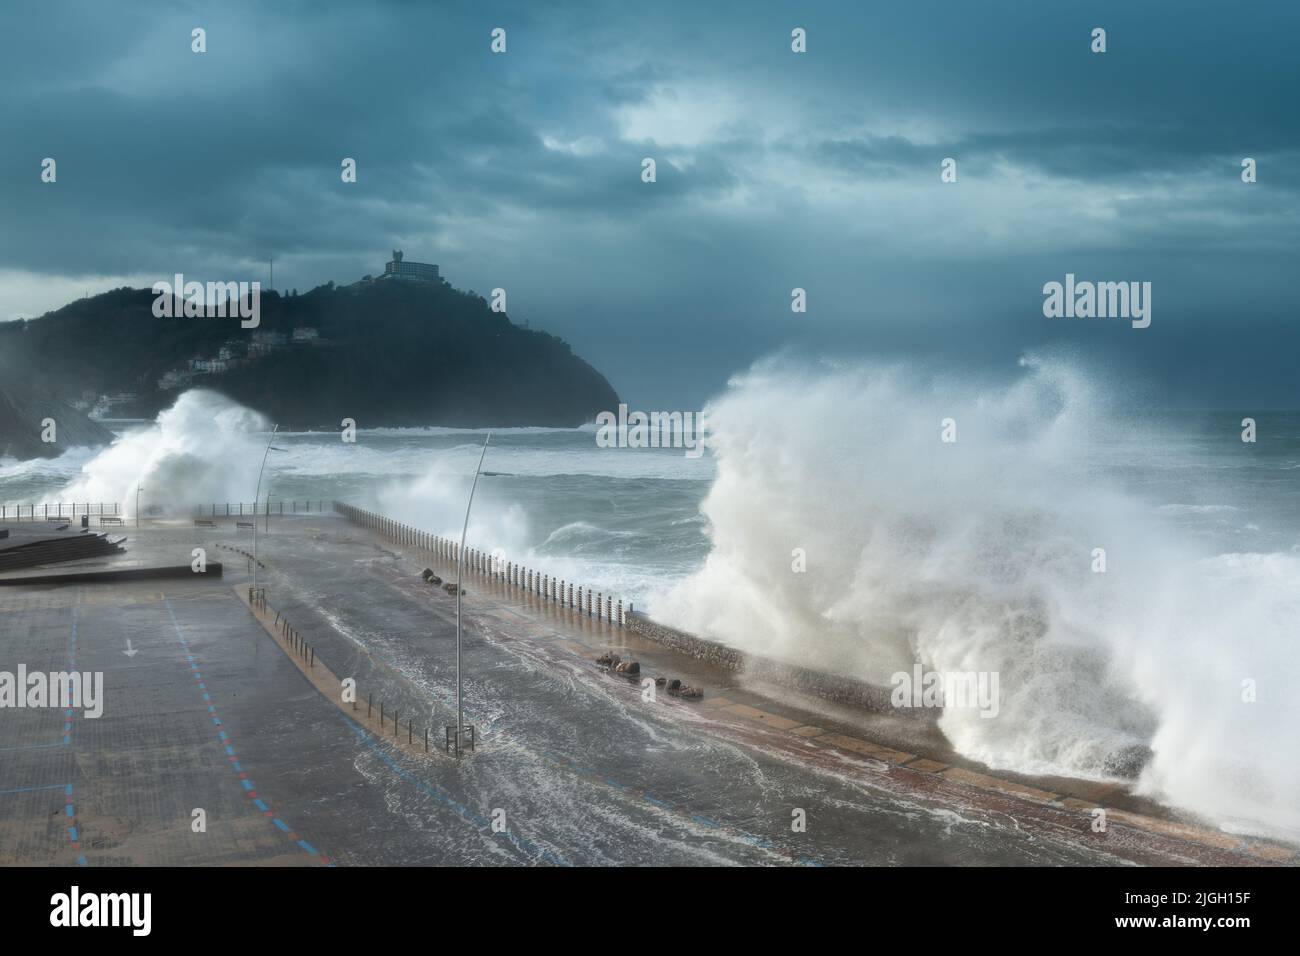 Waves breaking on New Promenade of Donostia-San Sebastian, Spain Stock Photo